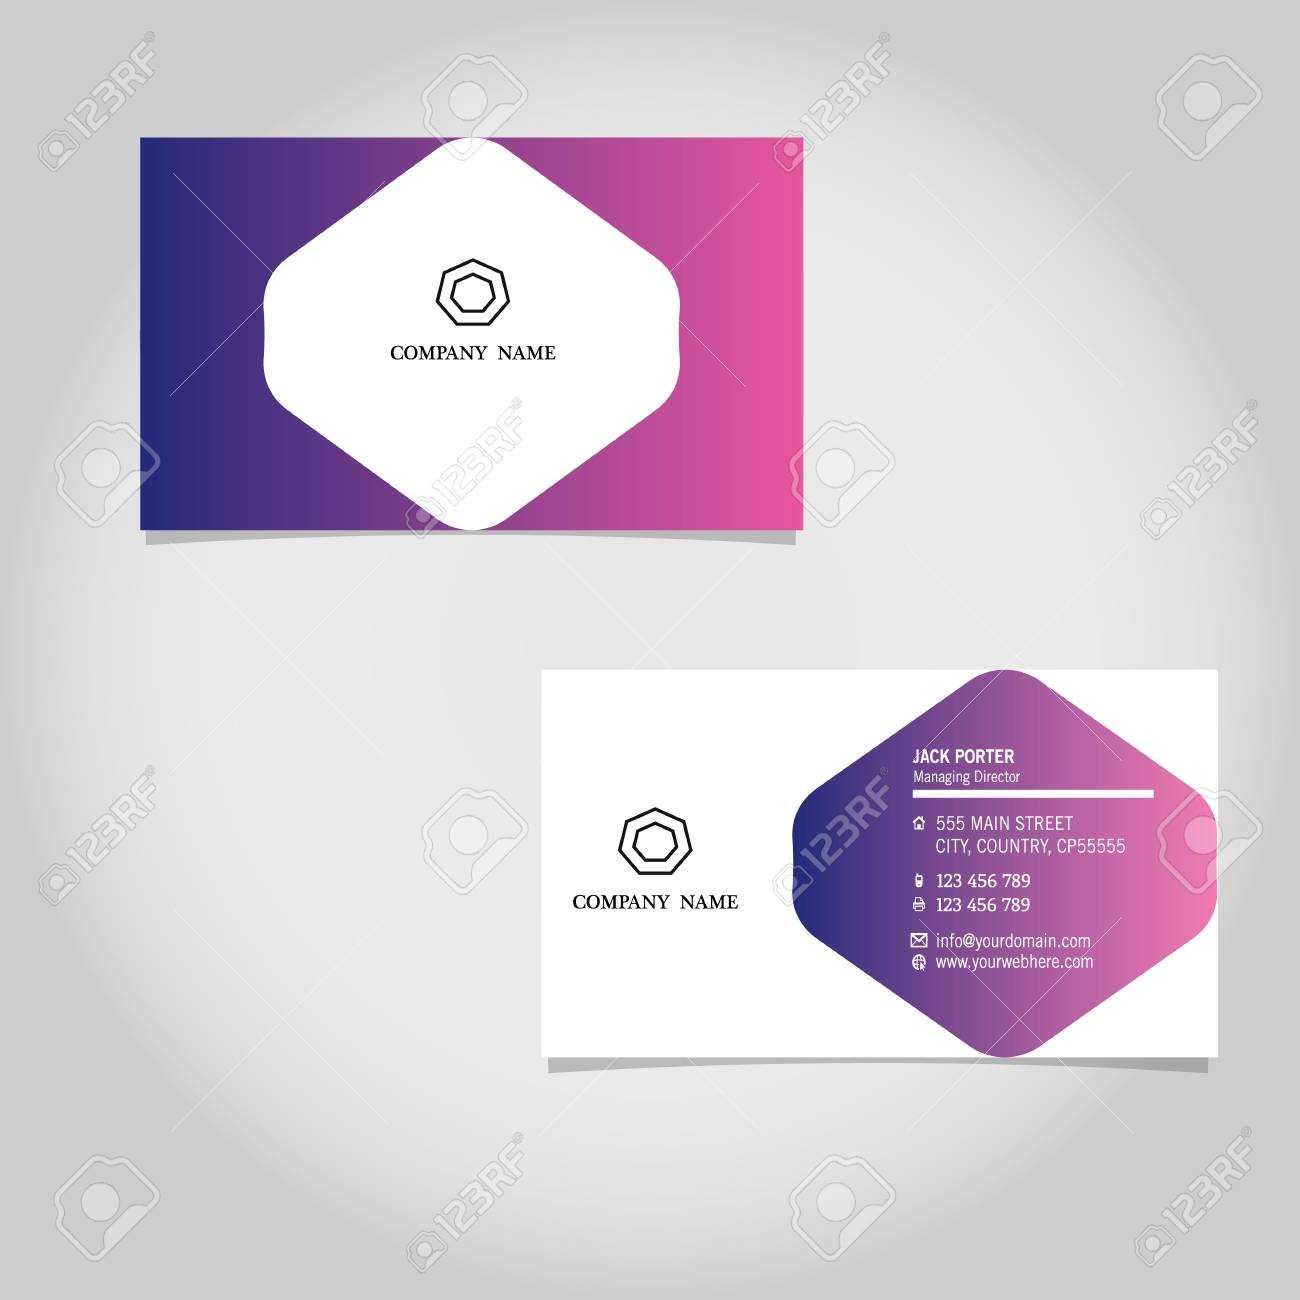 Vector Business Card Template Design Adobe Illustrator Regarding Adobe Illustrator Business Card Template